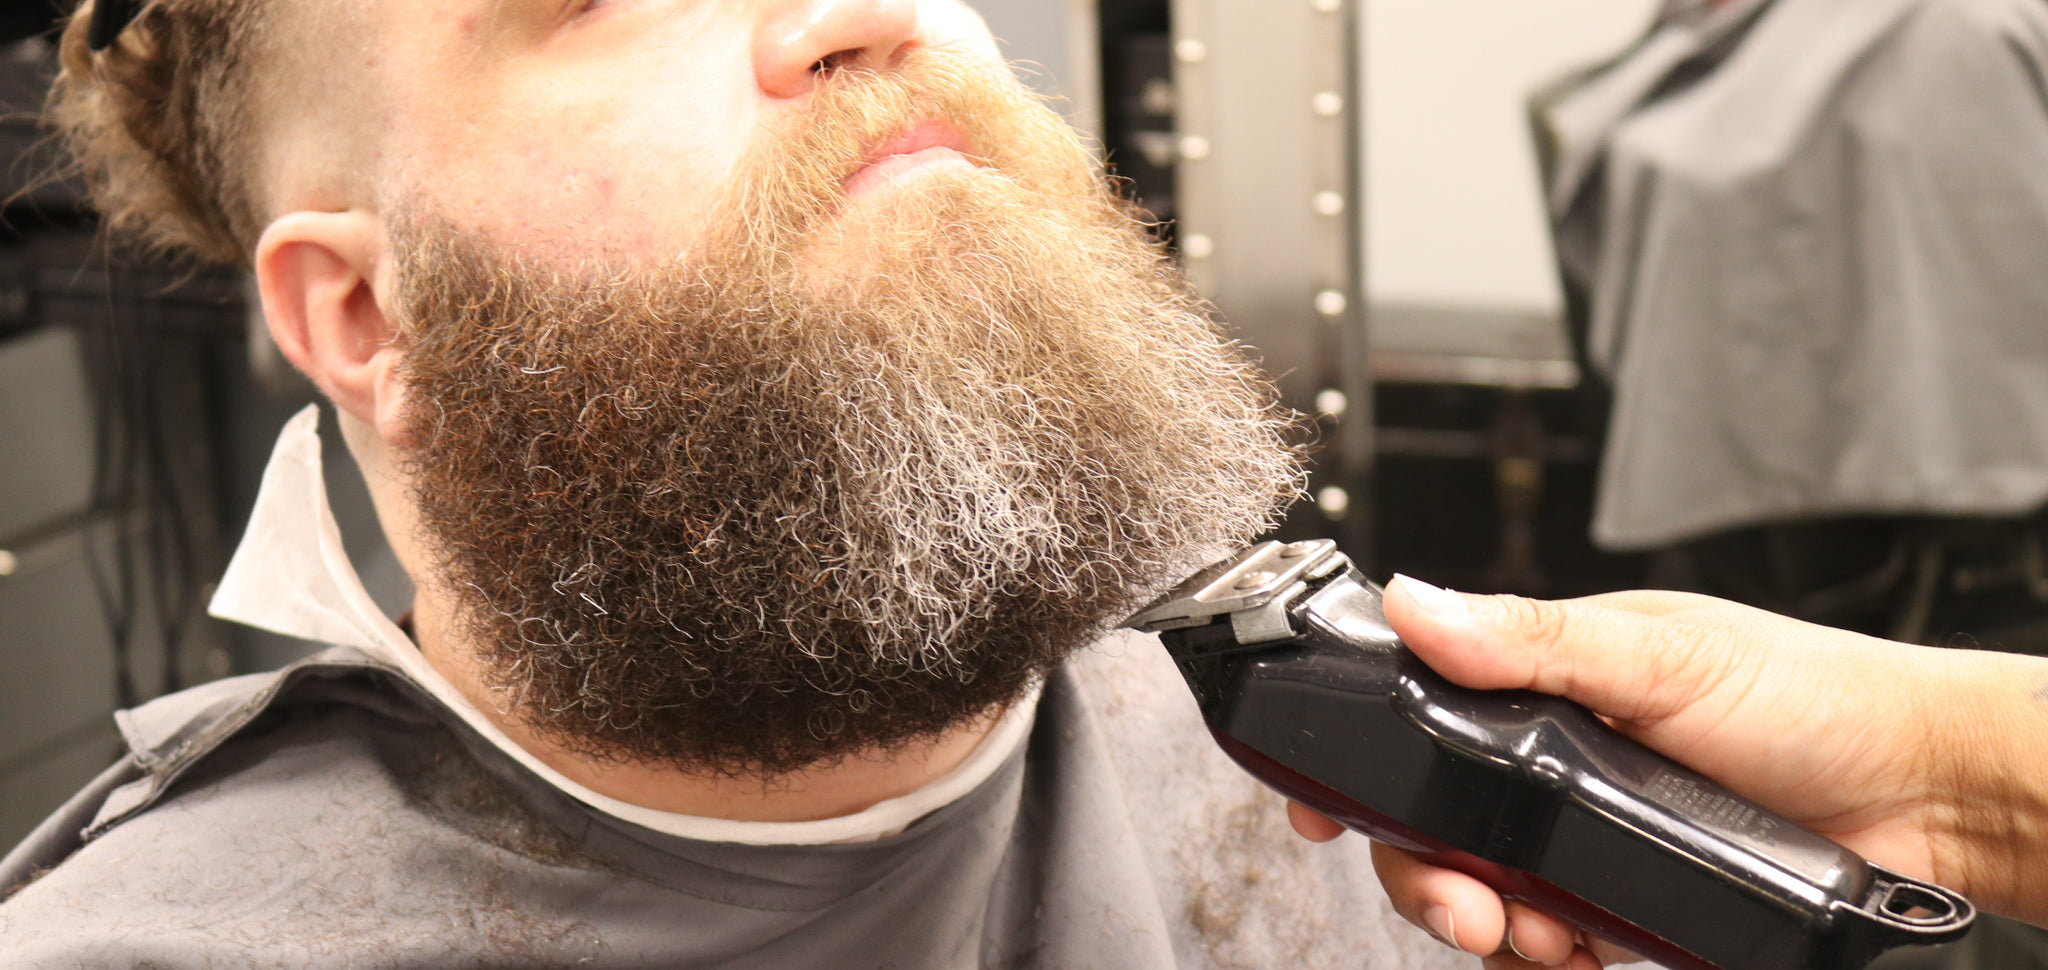 Gaithersburg, beard trim, potomac, maryland, virgina, washington, D.C., gaithersburg barber, maryland barber, rockville barber, beard trim, beard butter, beard oil, beard balm, hair butter, best barber